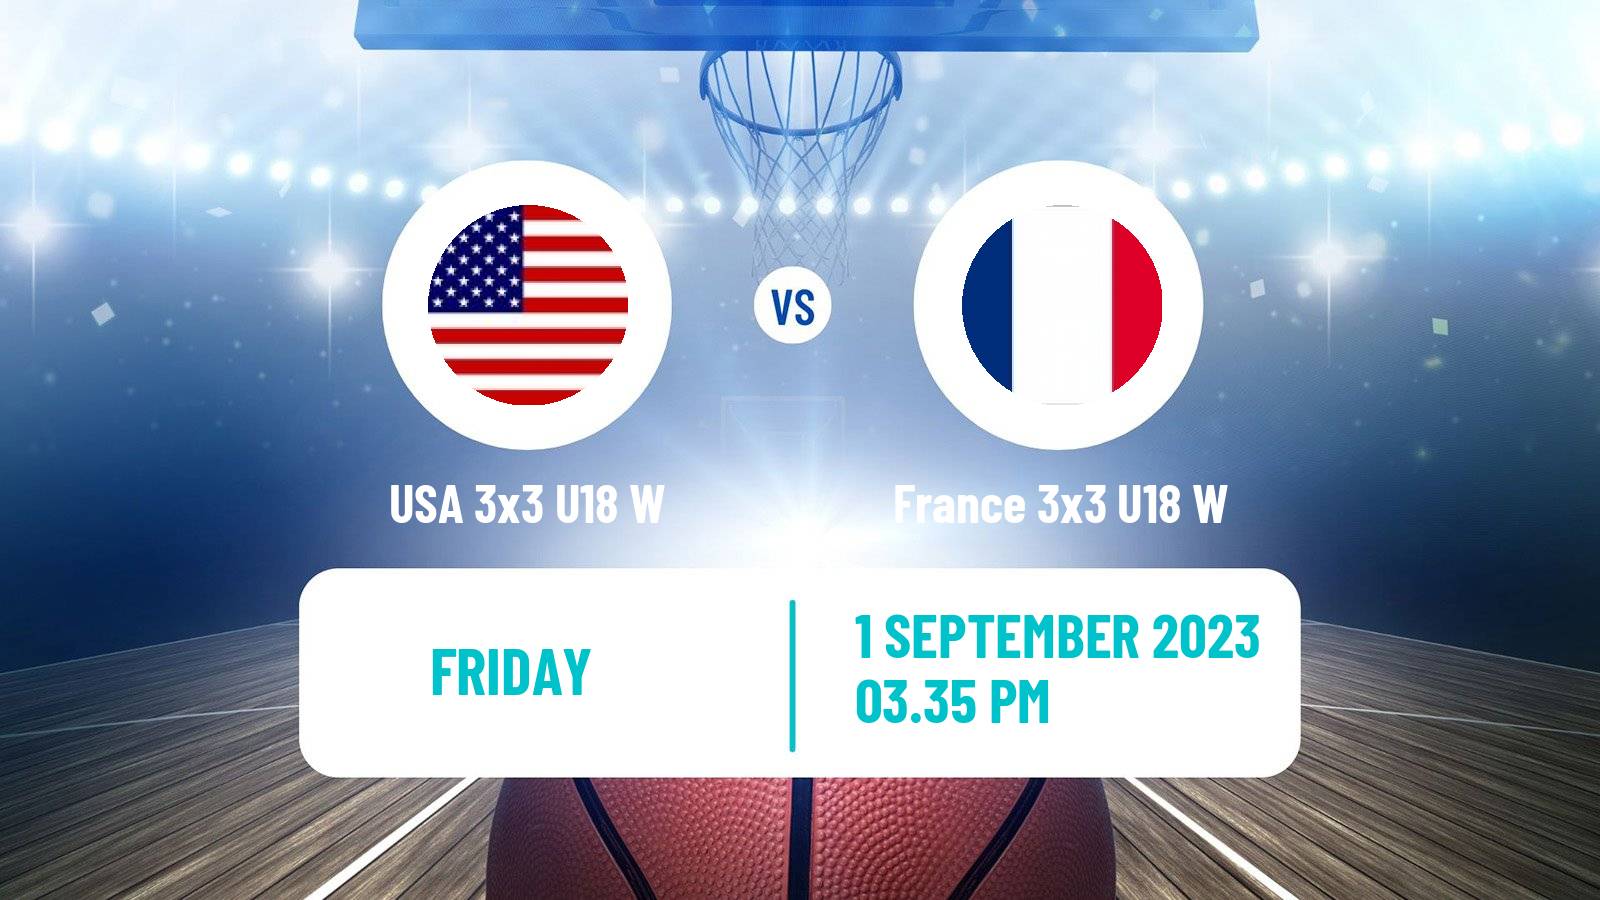 Basketball World Cup Basketball 3x3 U18 Women USA 3x3 U18 W - France 3x3 U18 W